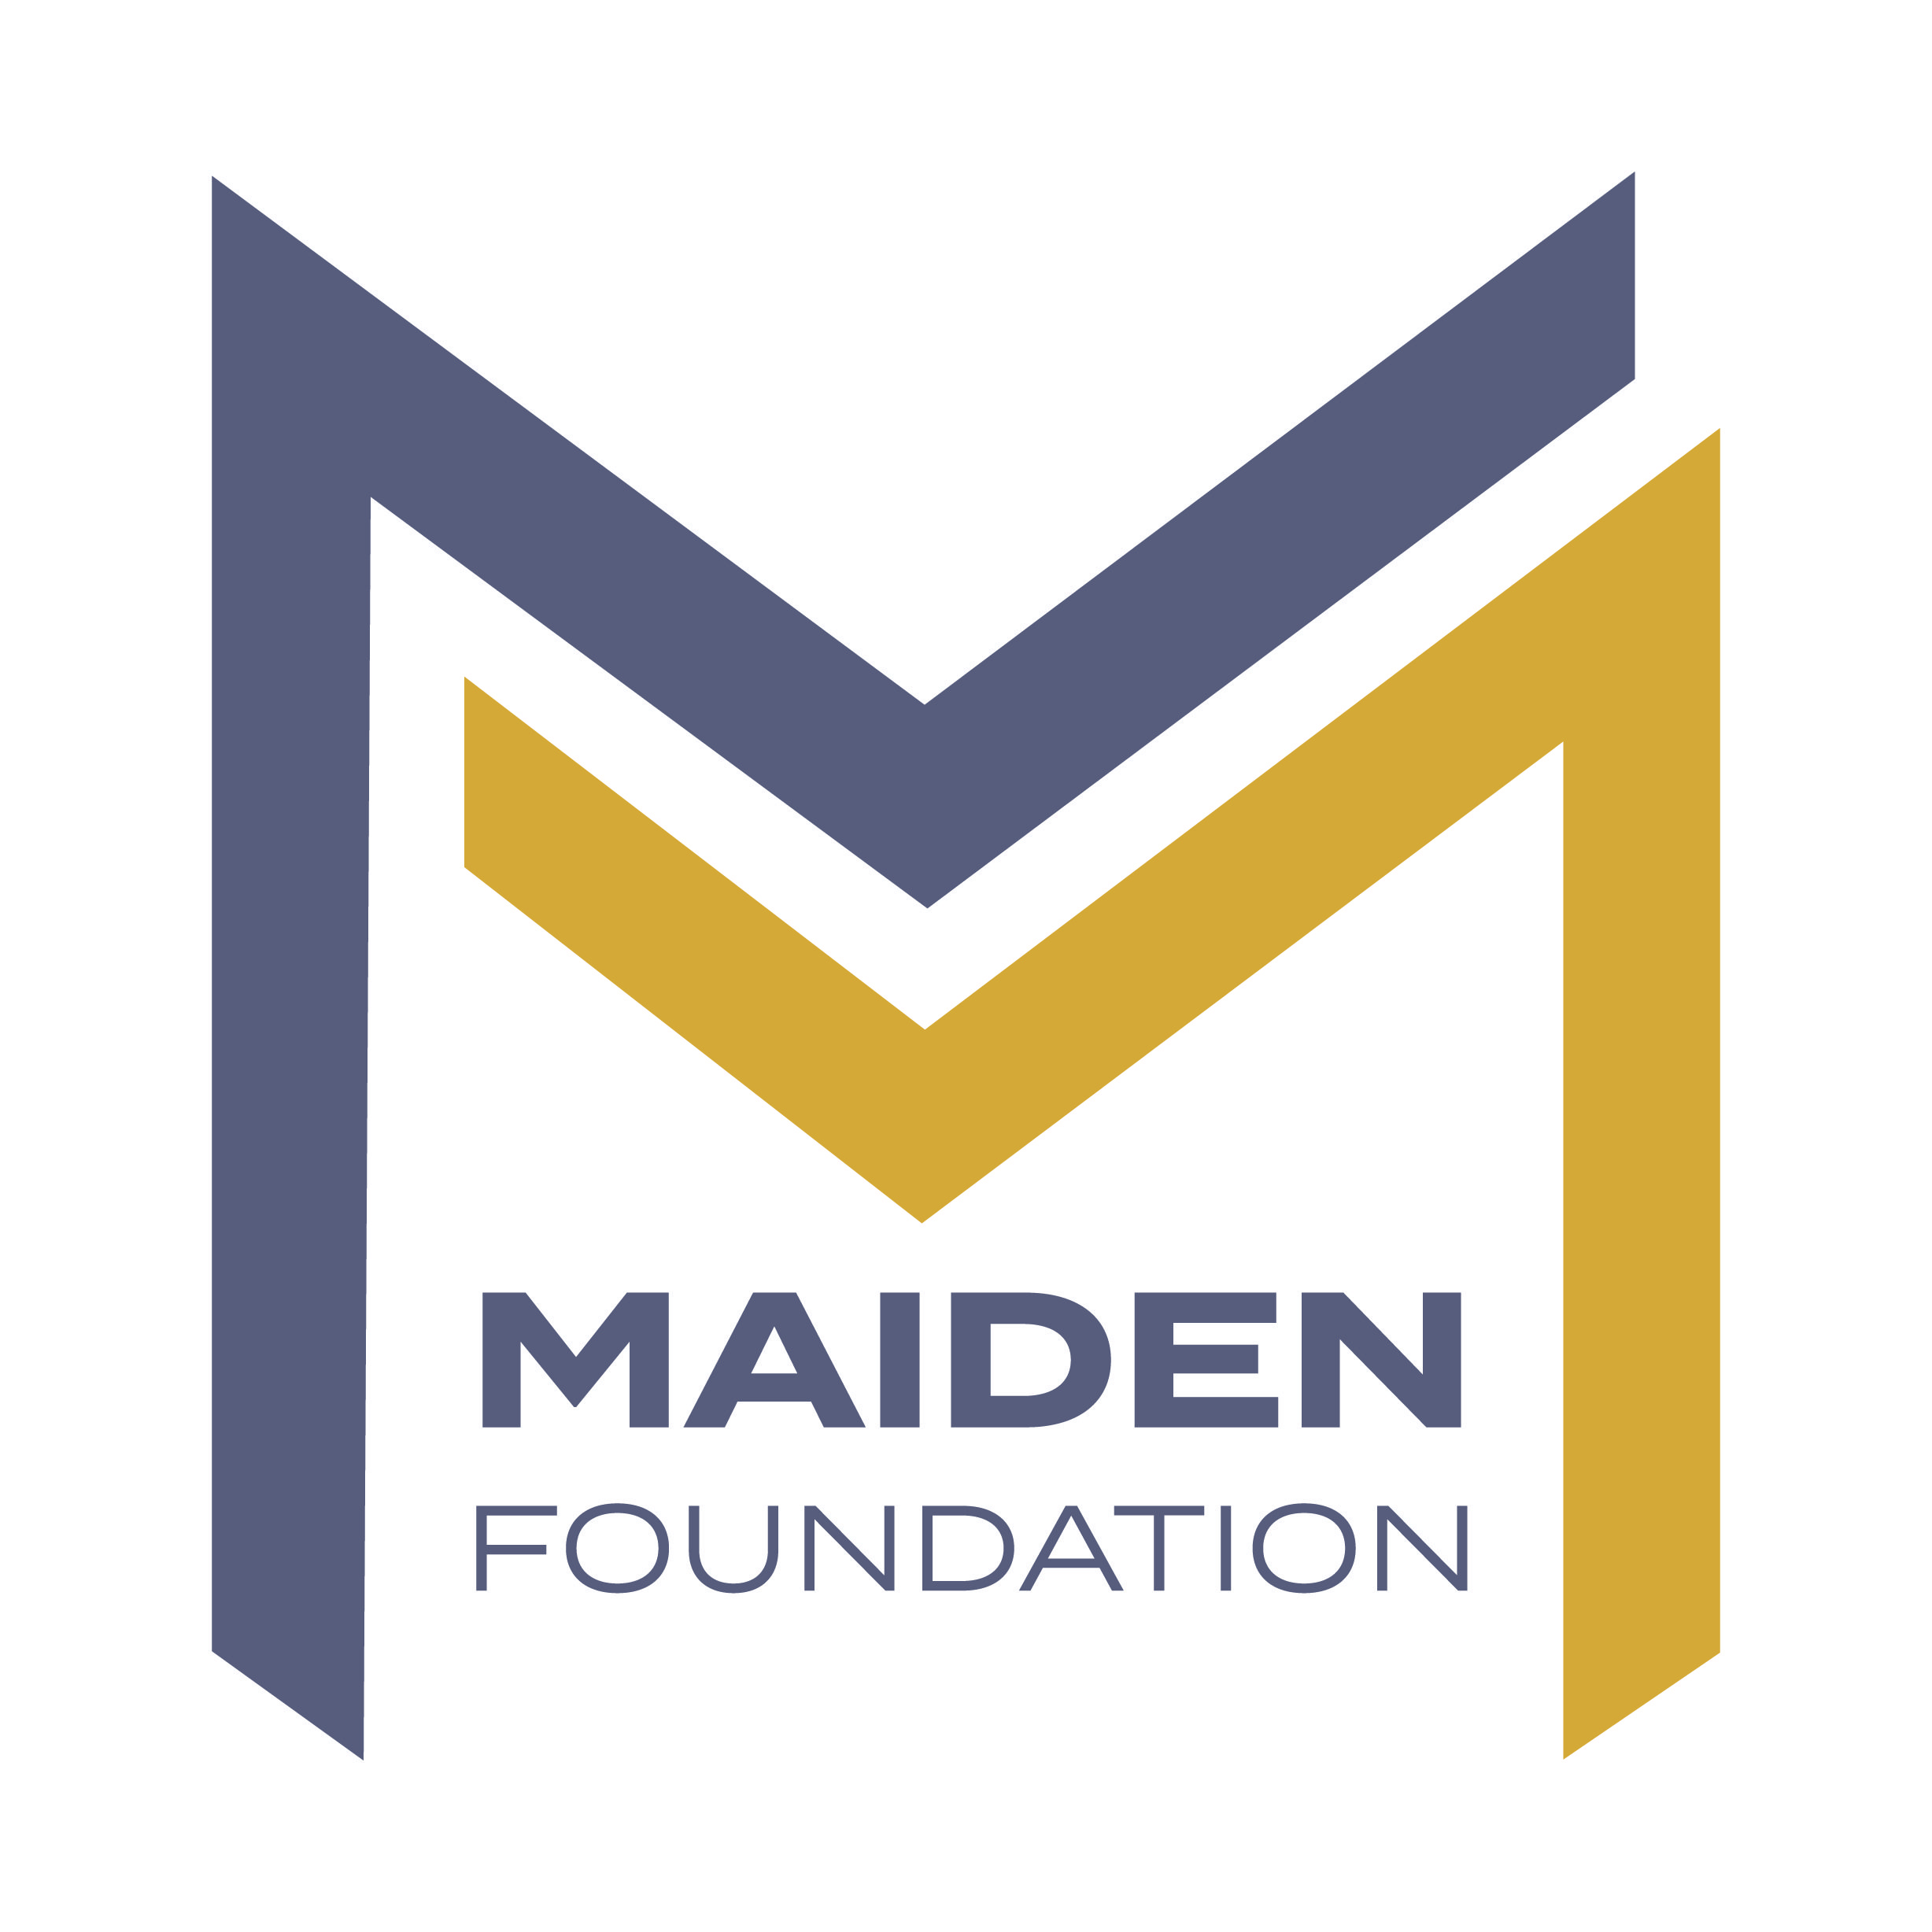 Maiden Foundaton logo